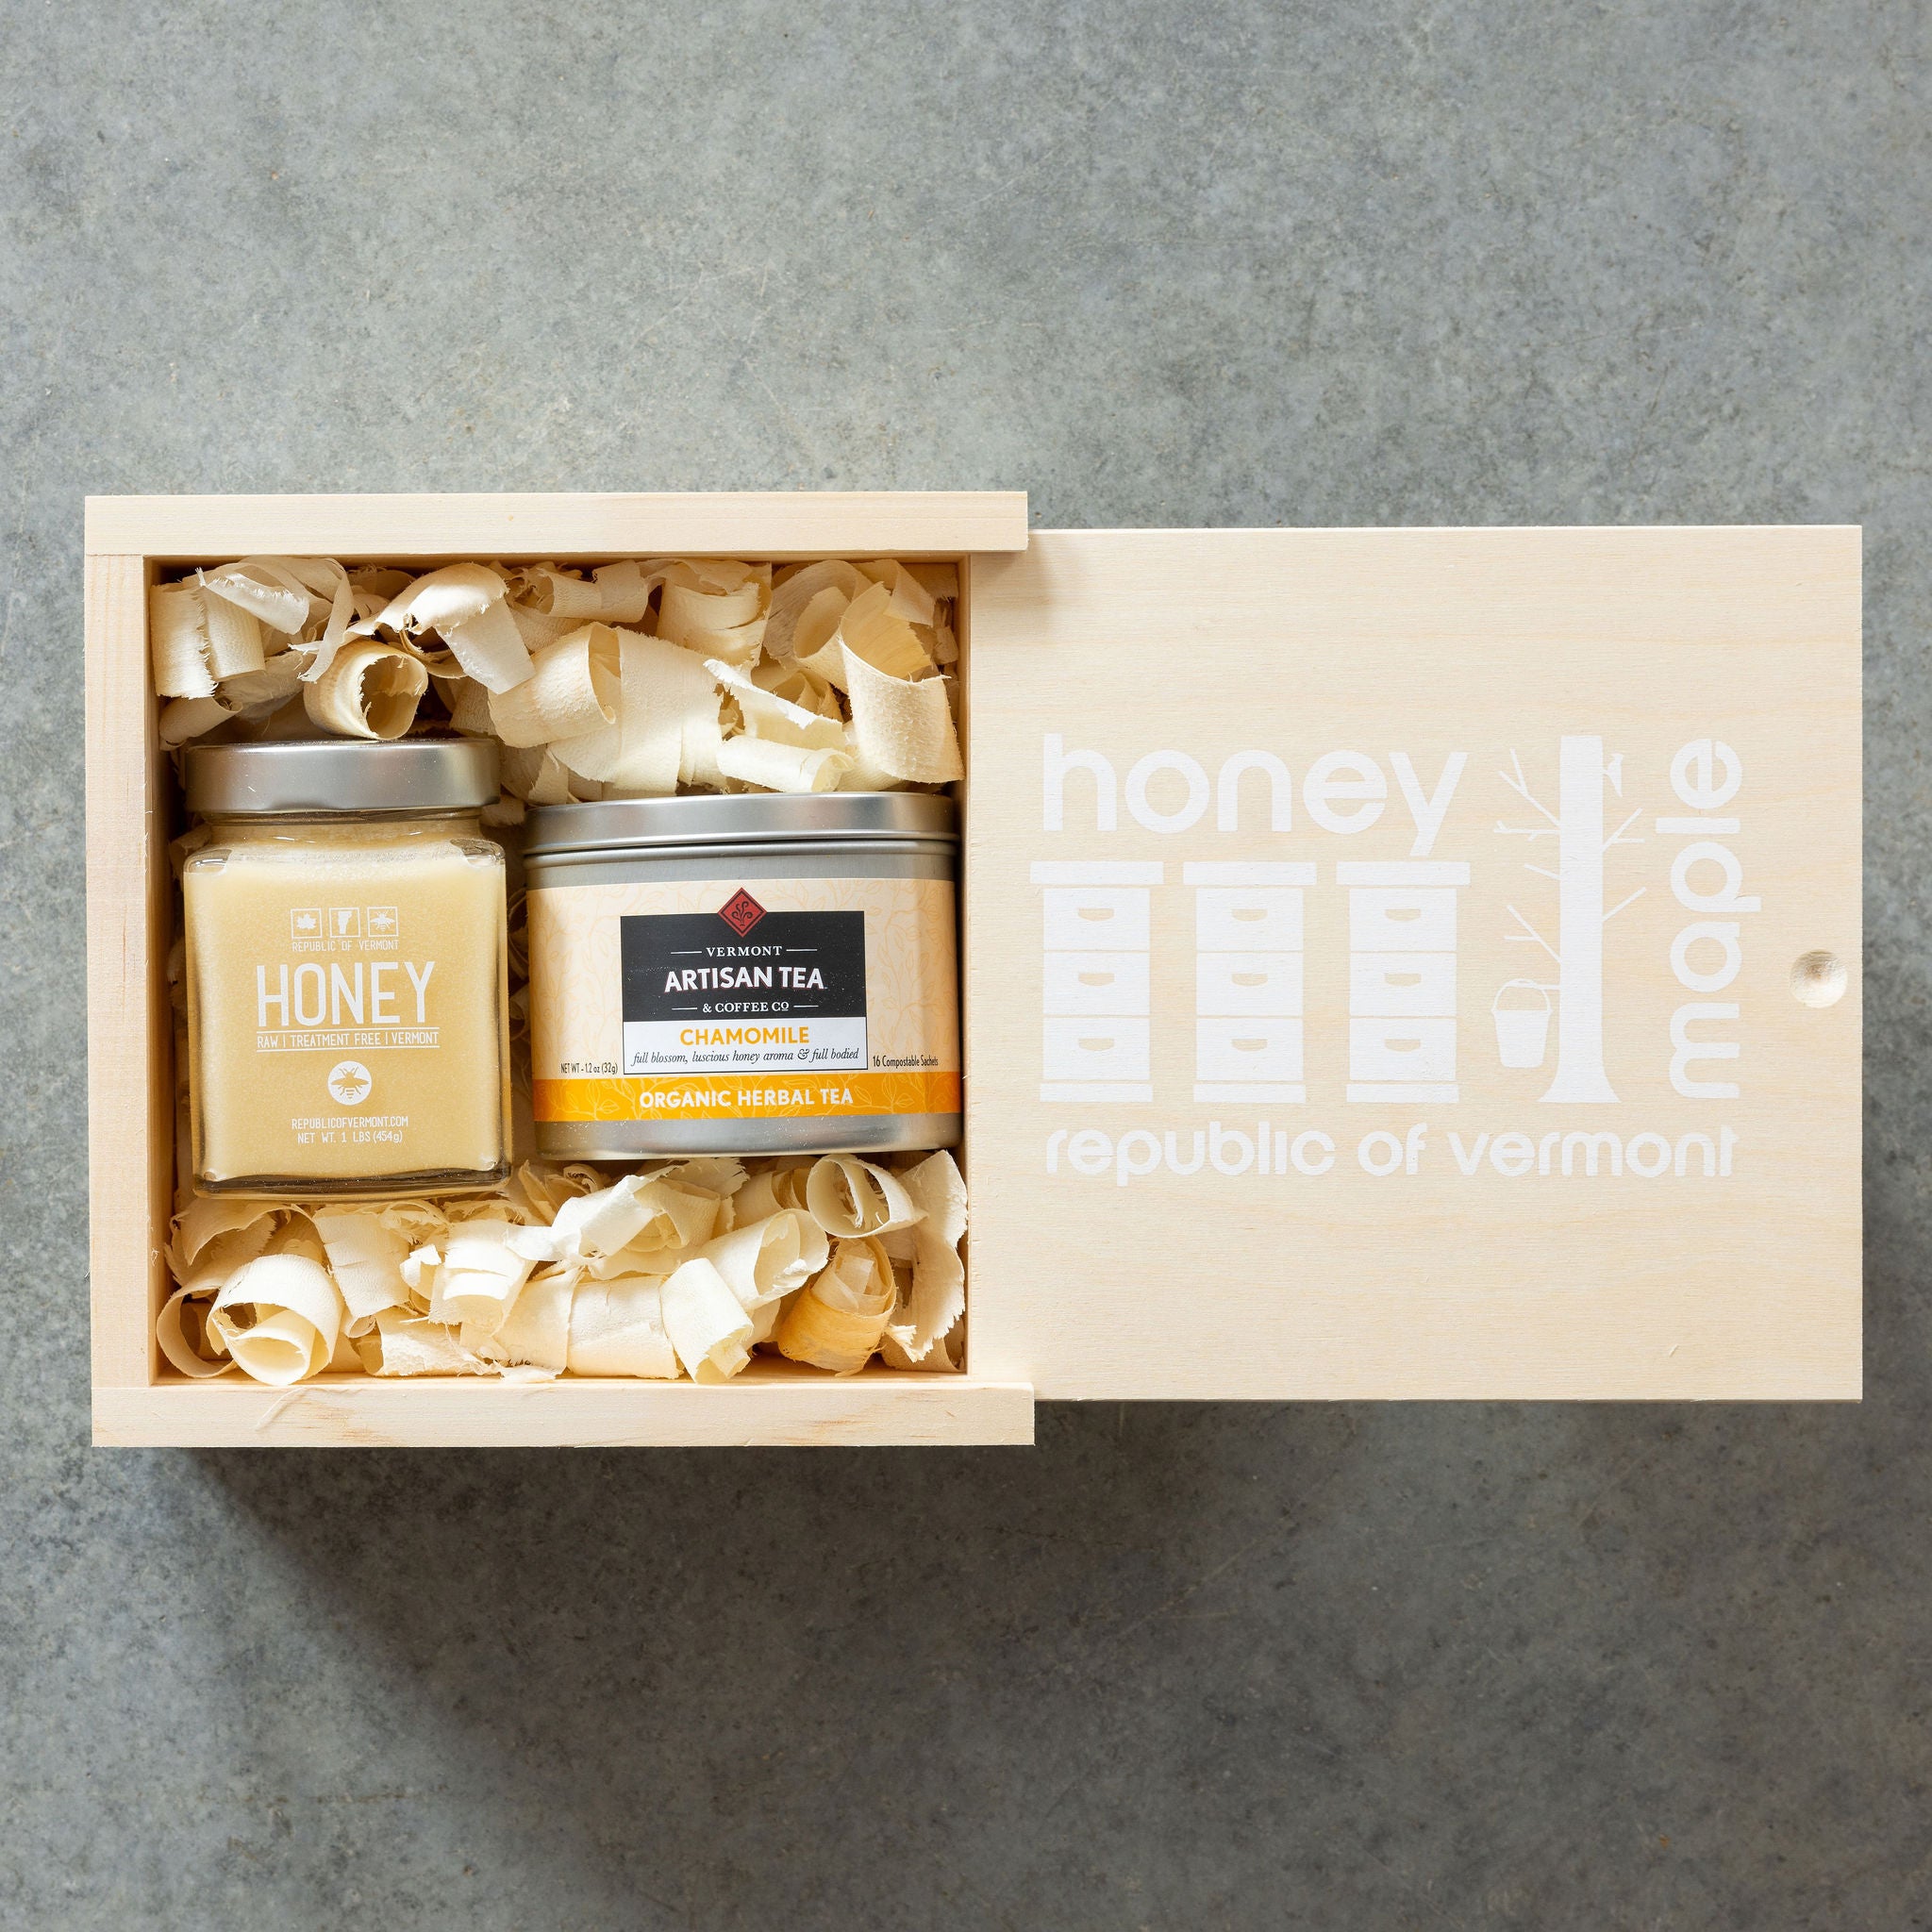 The Honey & Tea Box